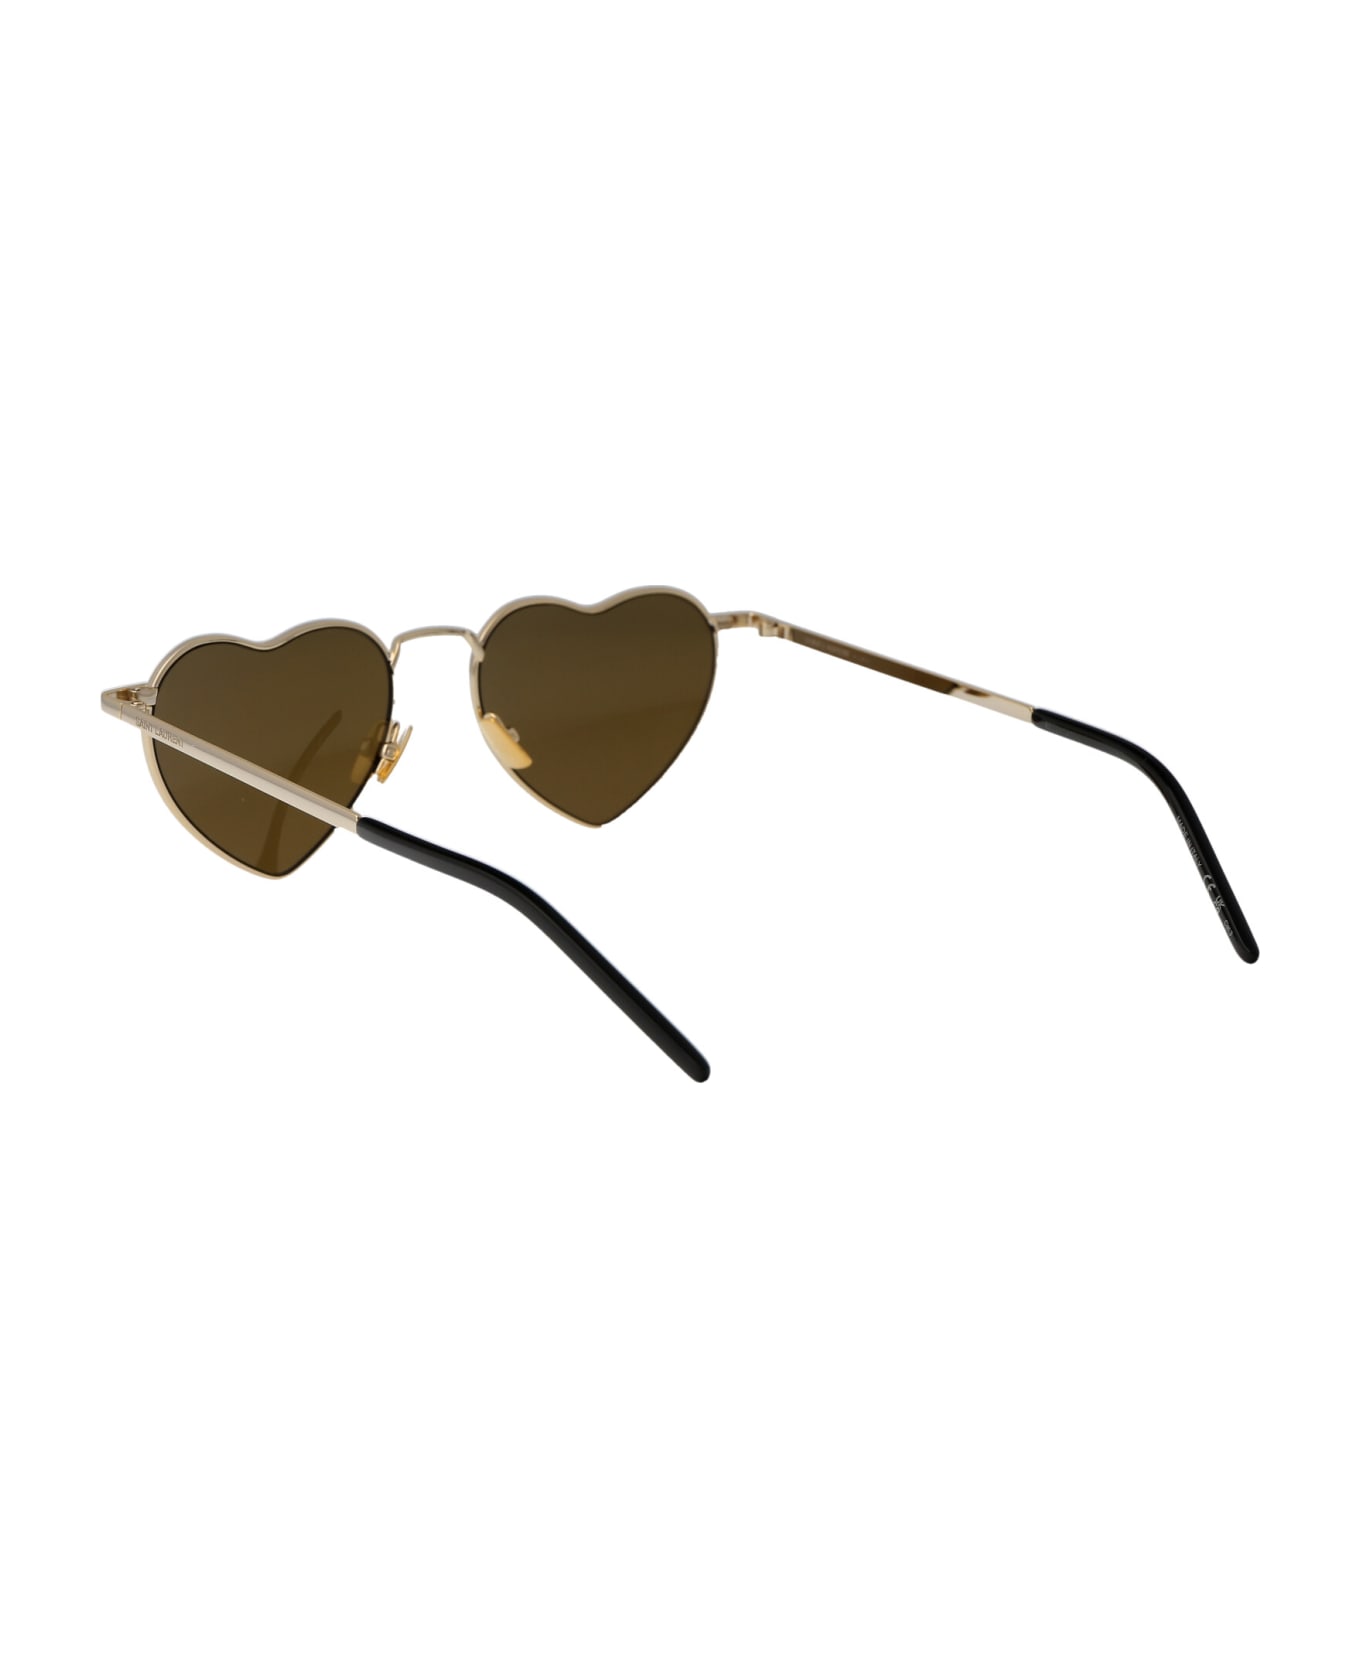 Saint Laurent Eyewear Sl 301 Loulou Sunglasses - 015 GOLD GOLD BROWN